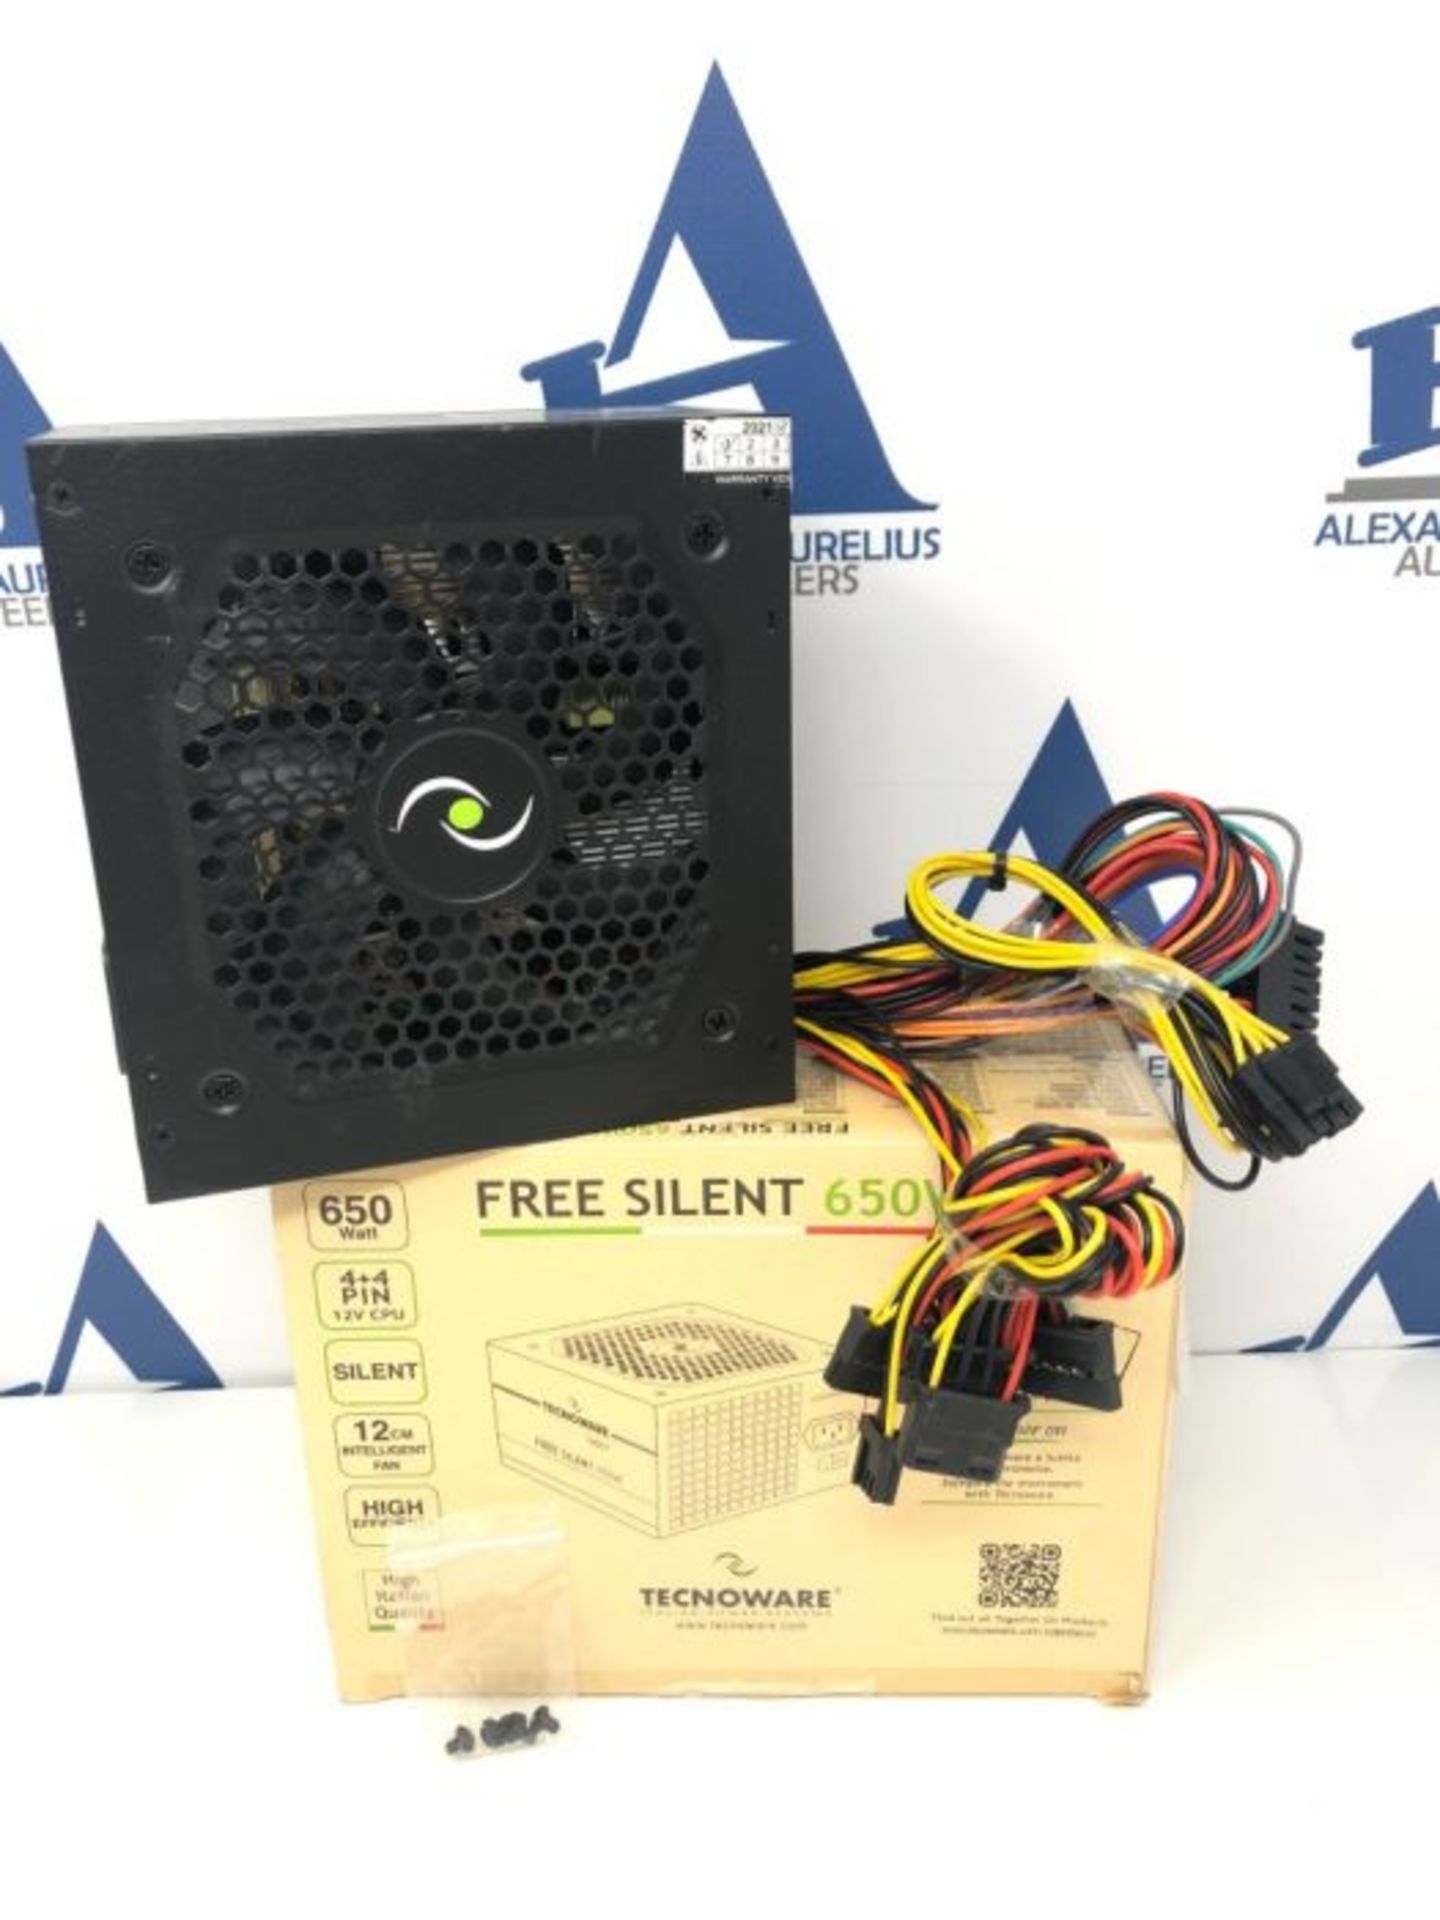 Tecnoware ATX 650 W Power Supply for PC - Silent 12 cm Fan - Connectors 3 x SATA, 1 x - Image 2 of 3